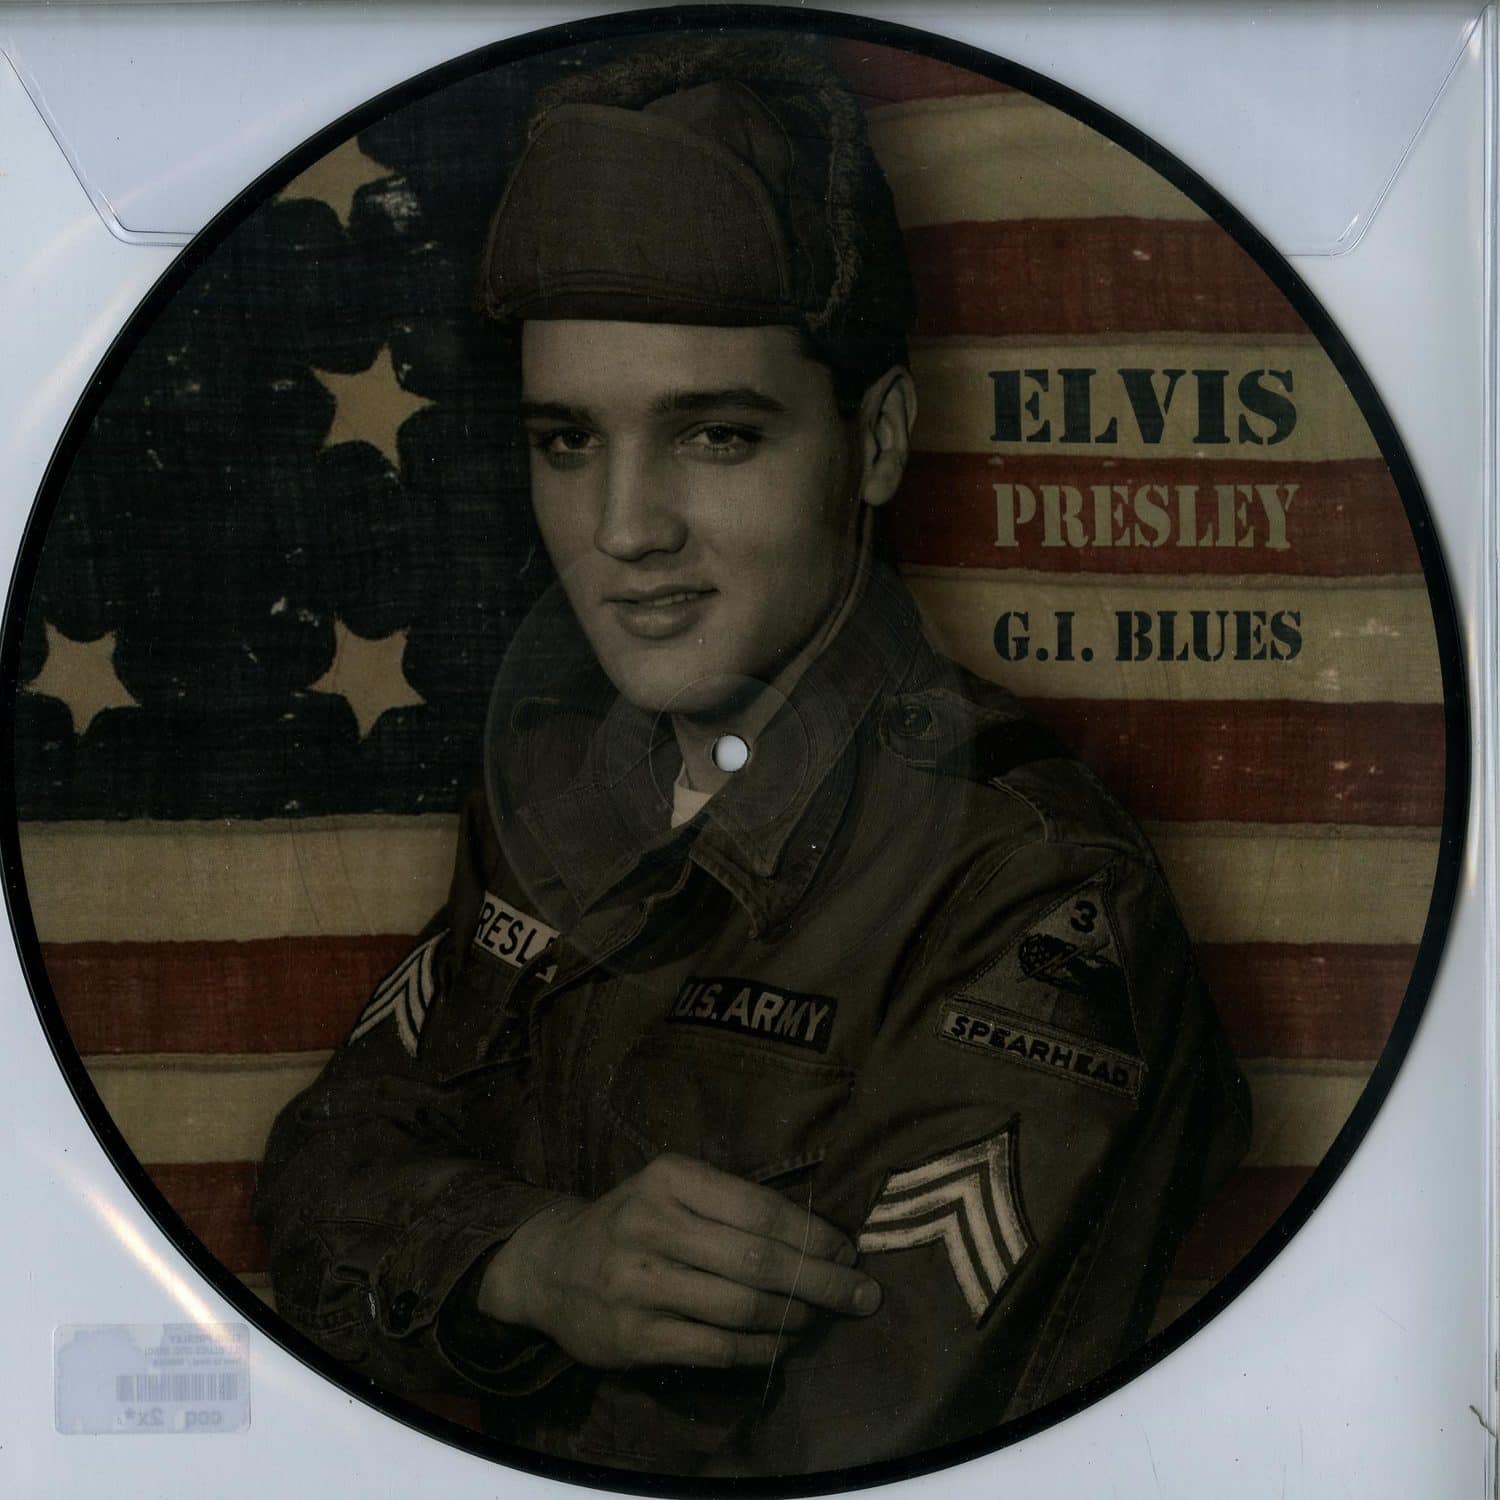 Elvis Presley - G.I. BLUES 